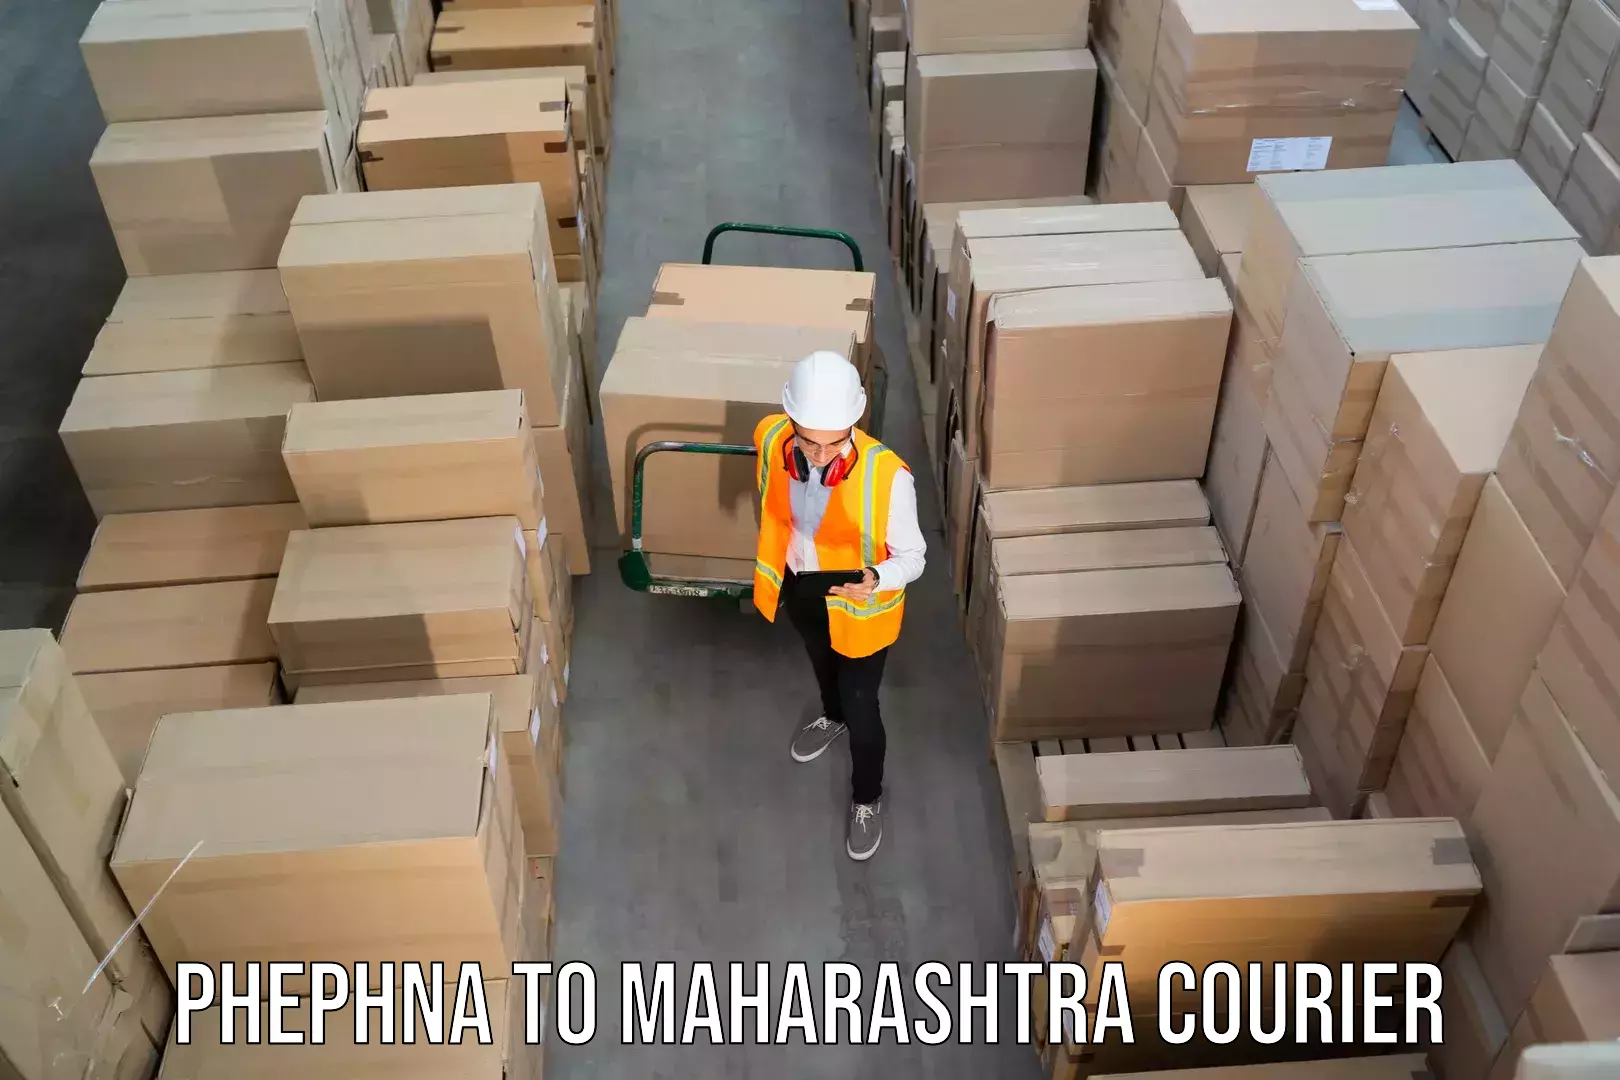 Next-day delivery options Phephna to IIIT Nagpur